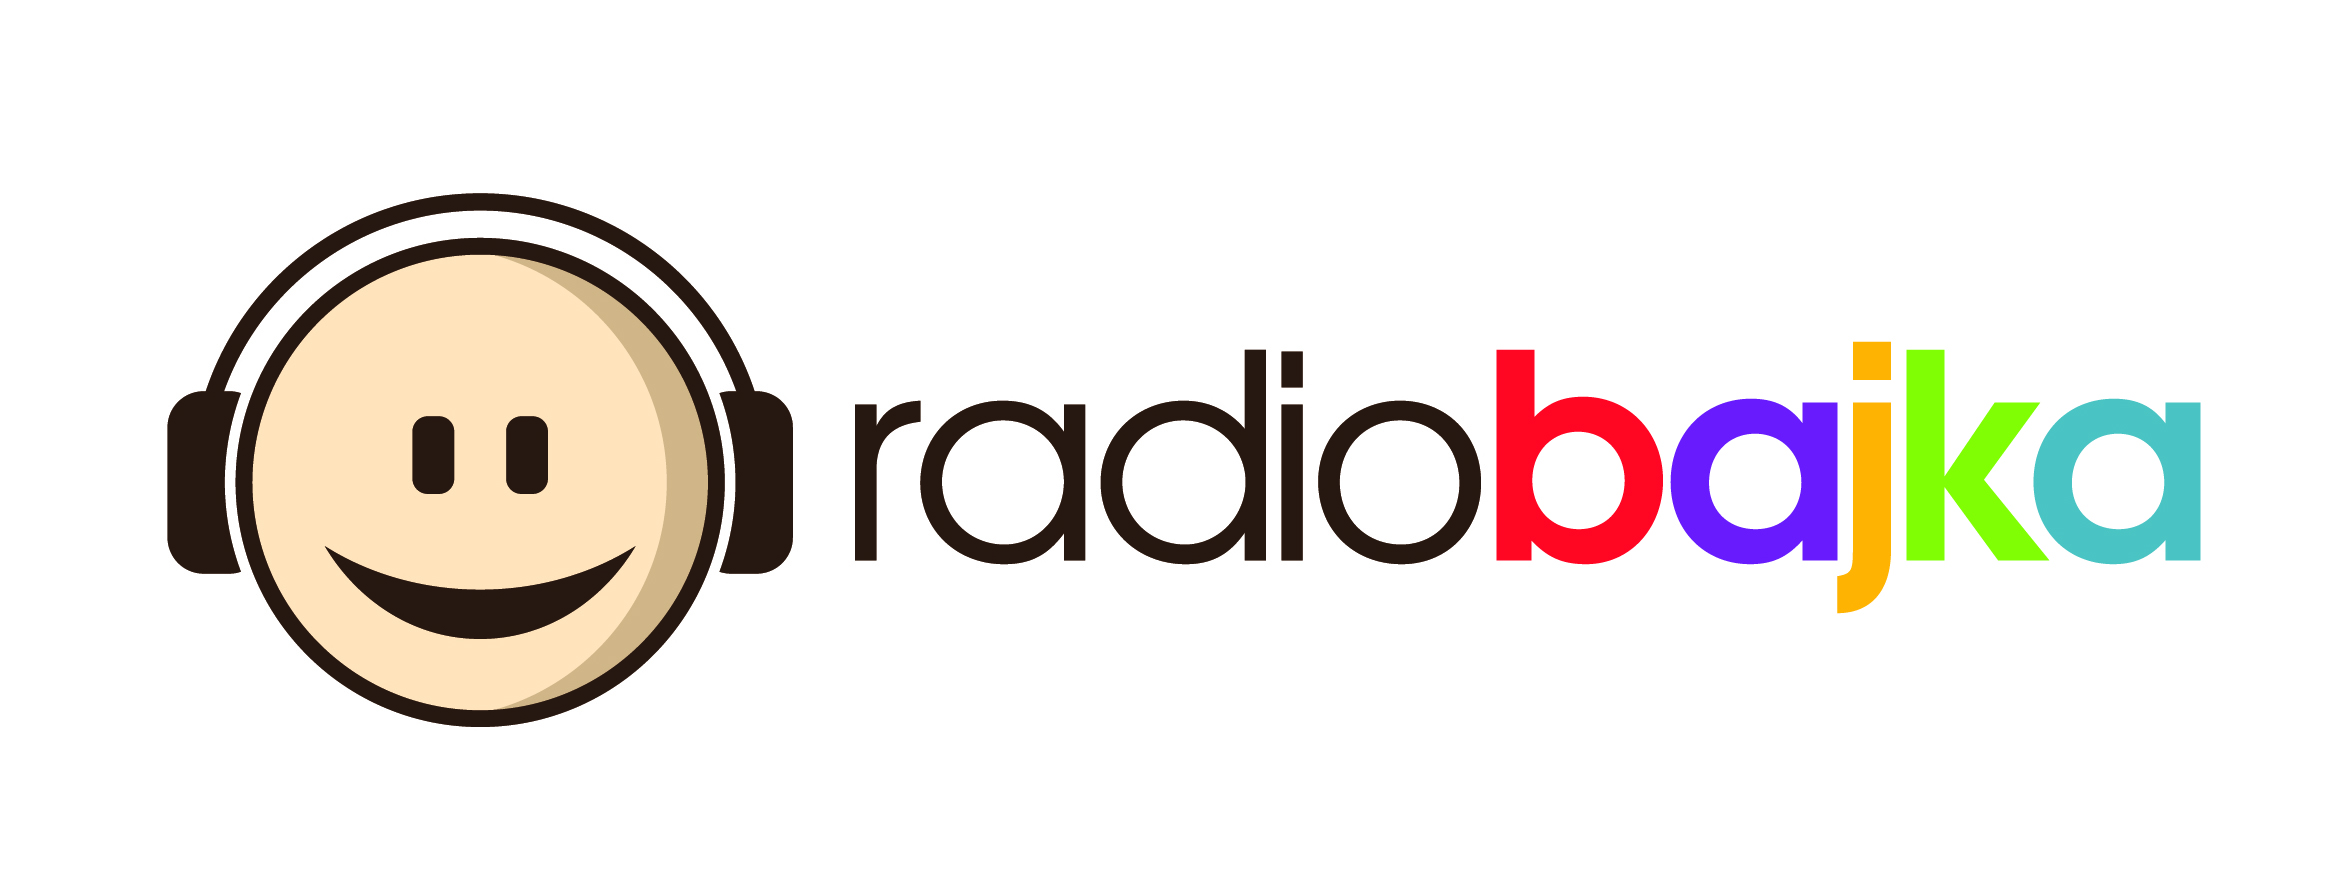 Radio Bajka logo